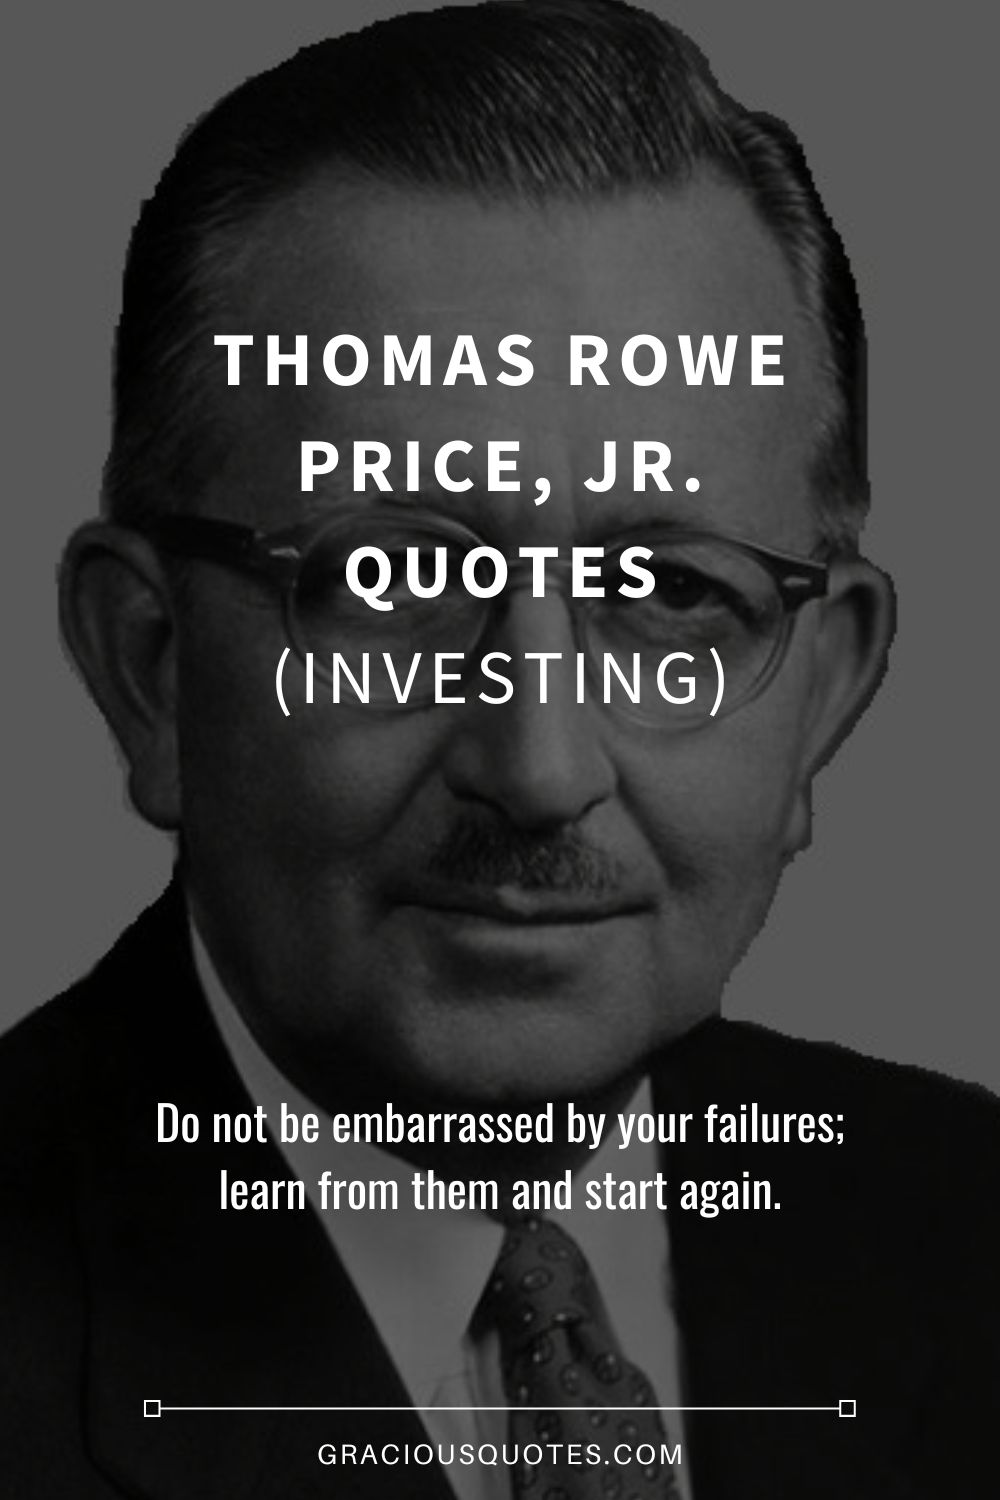 Thomas Rowe Price, Jr. Quotes (INVESTING) - Gracious Quotes